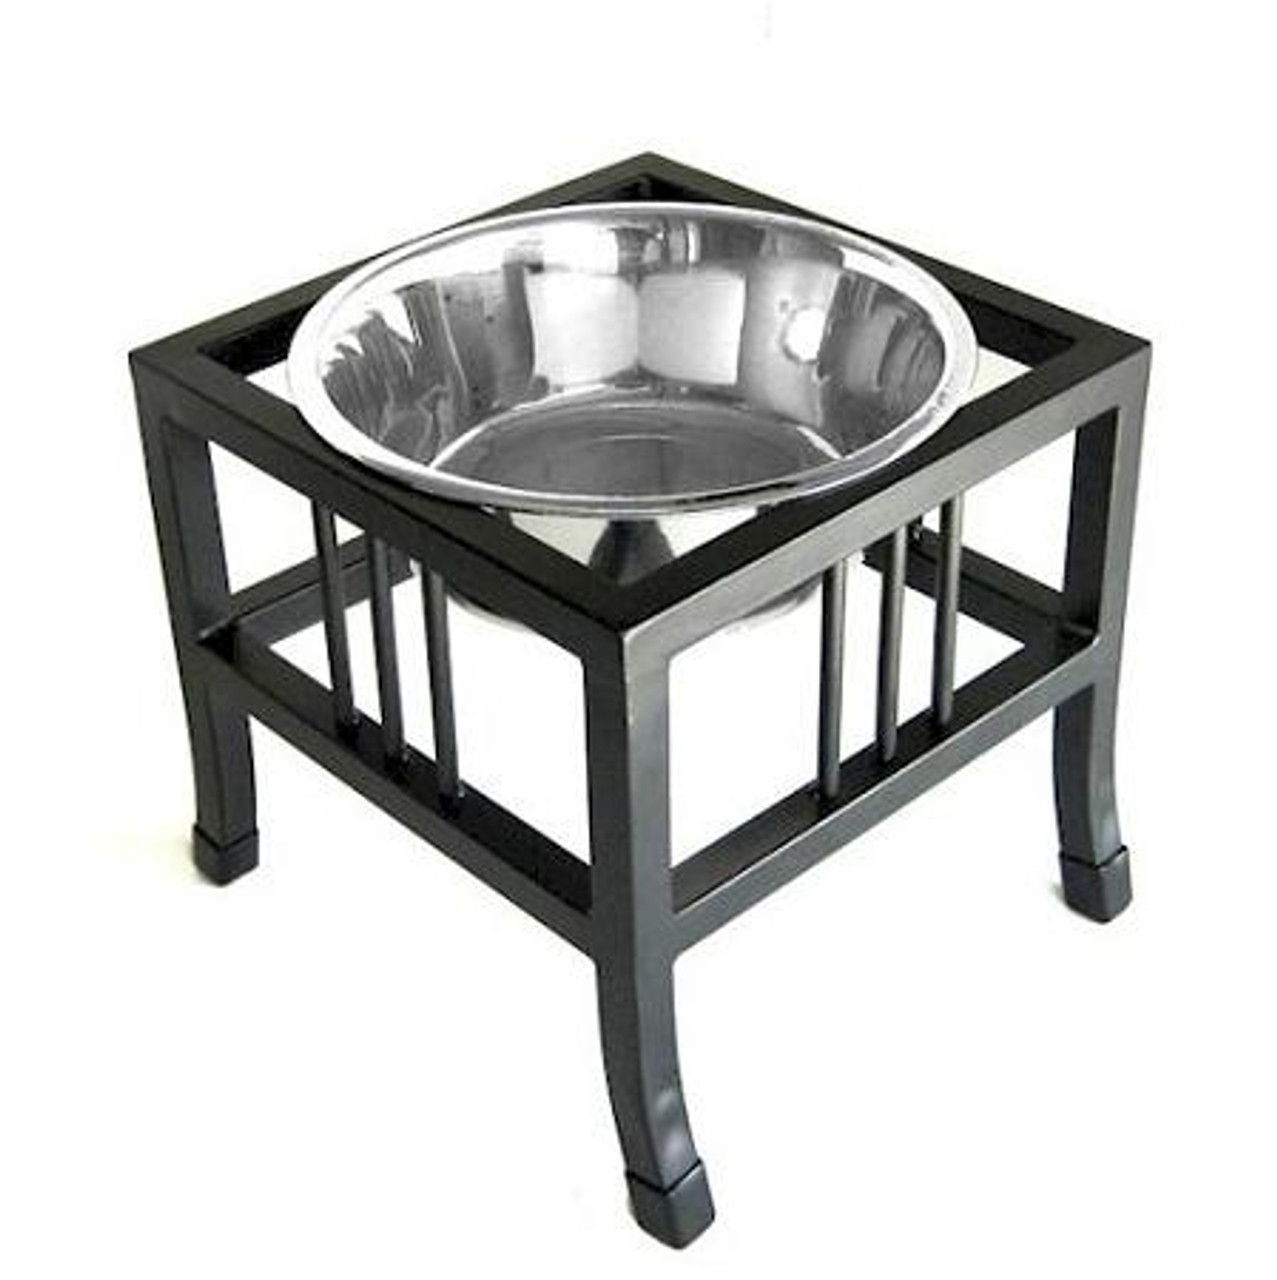 Elevated Dog Bowl - Large Single Stand